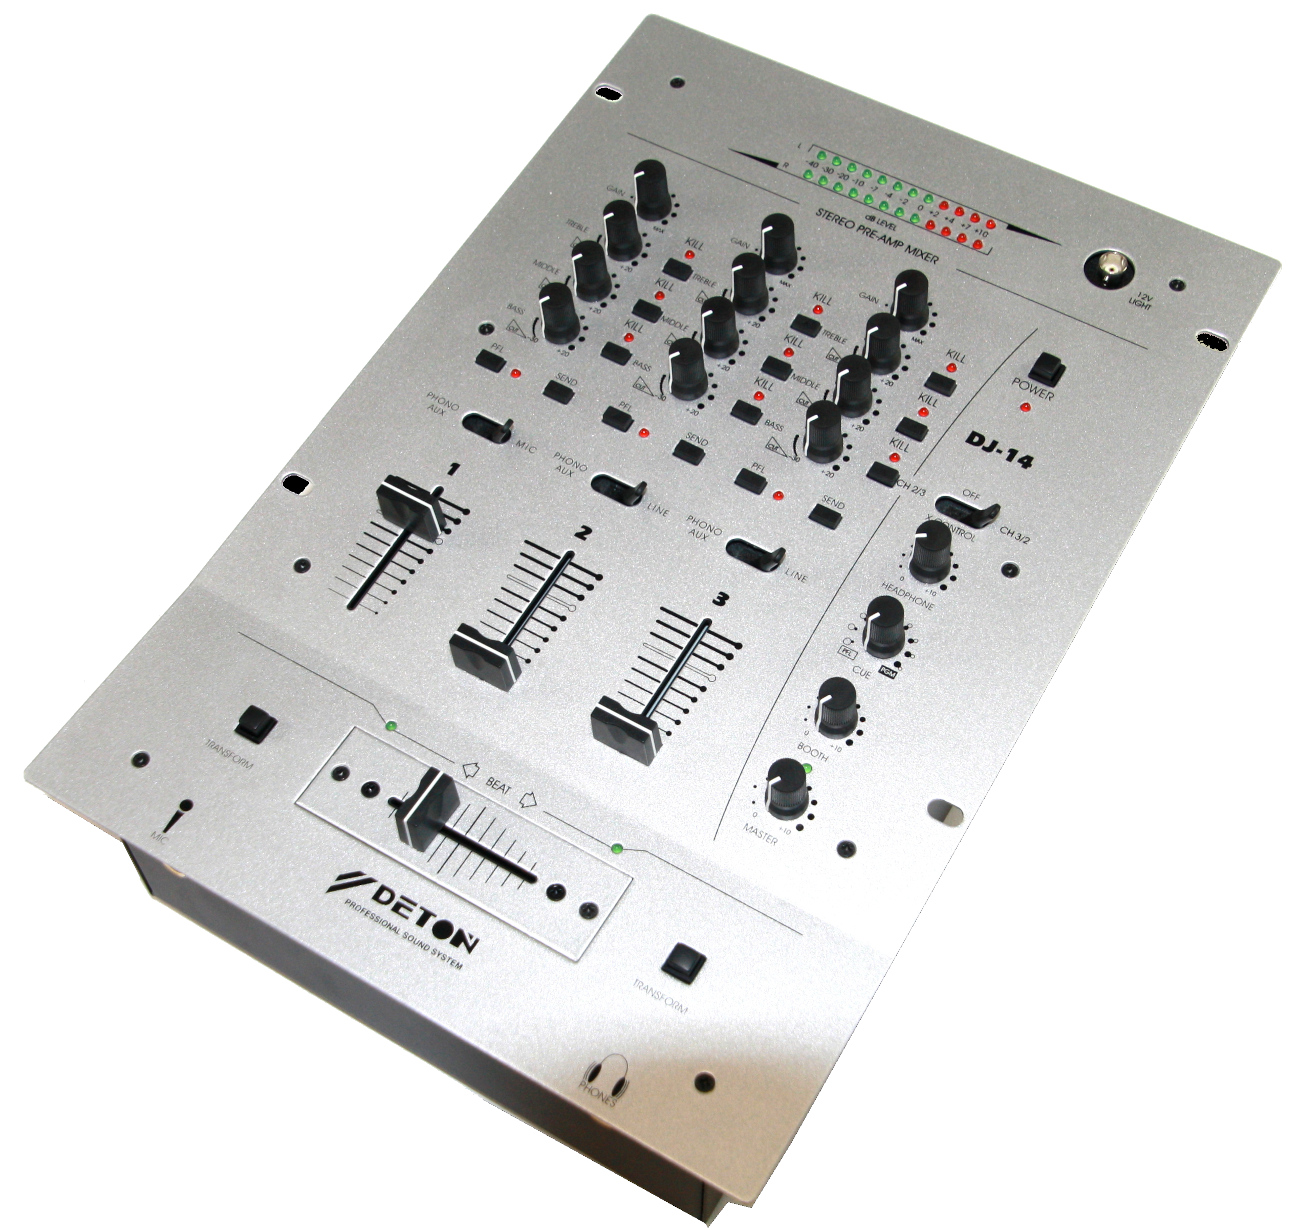 DJ-14 DJ Mixer | Elektronik Aps